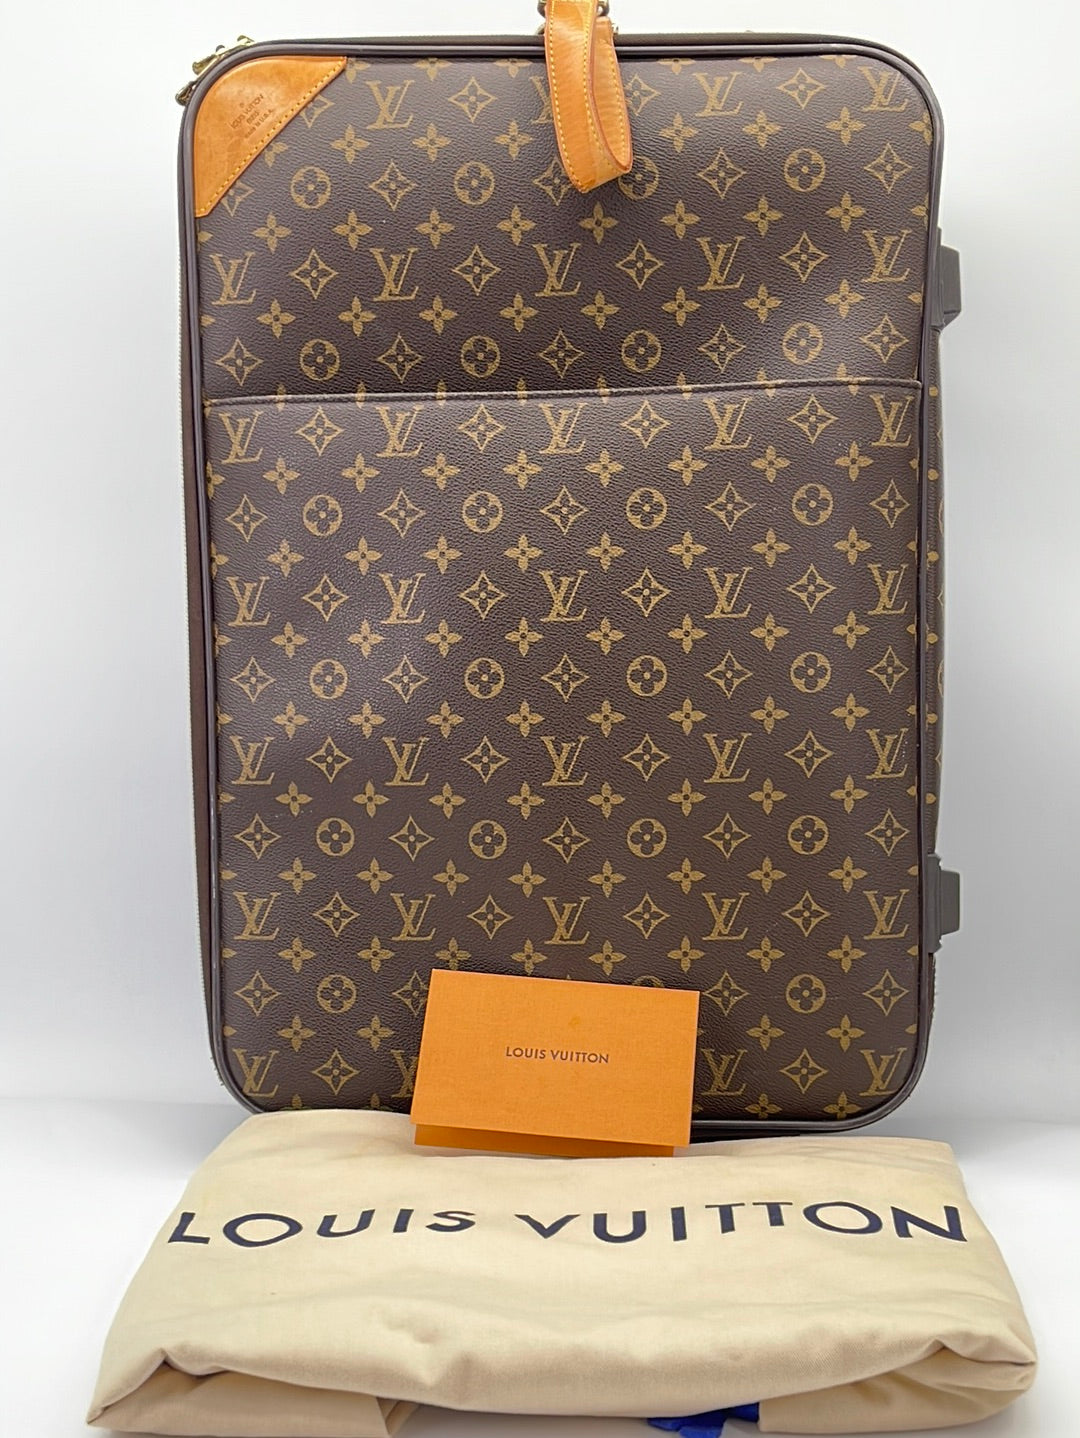 Louis Vuitton Pegase second hand prices